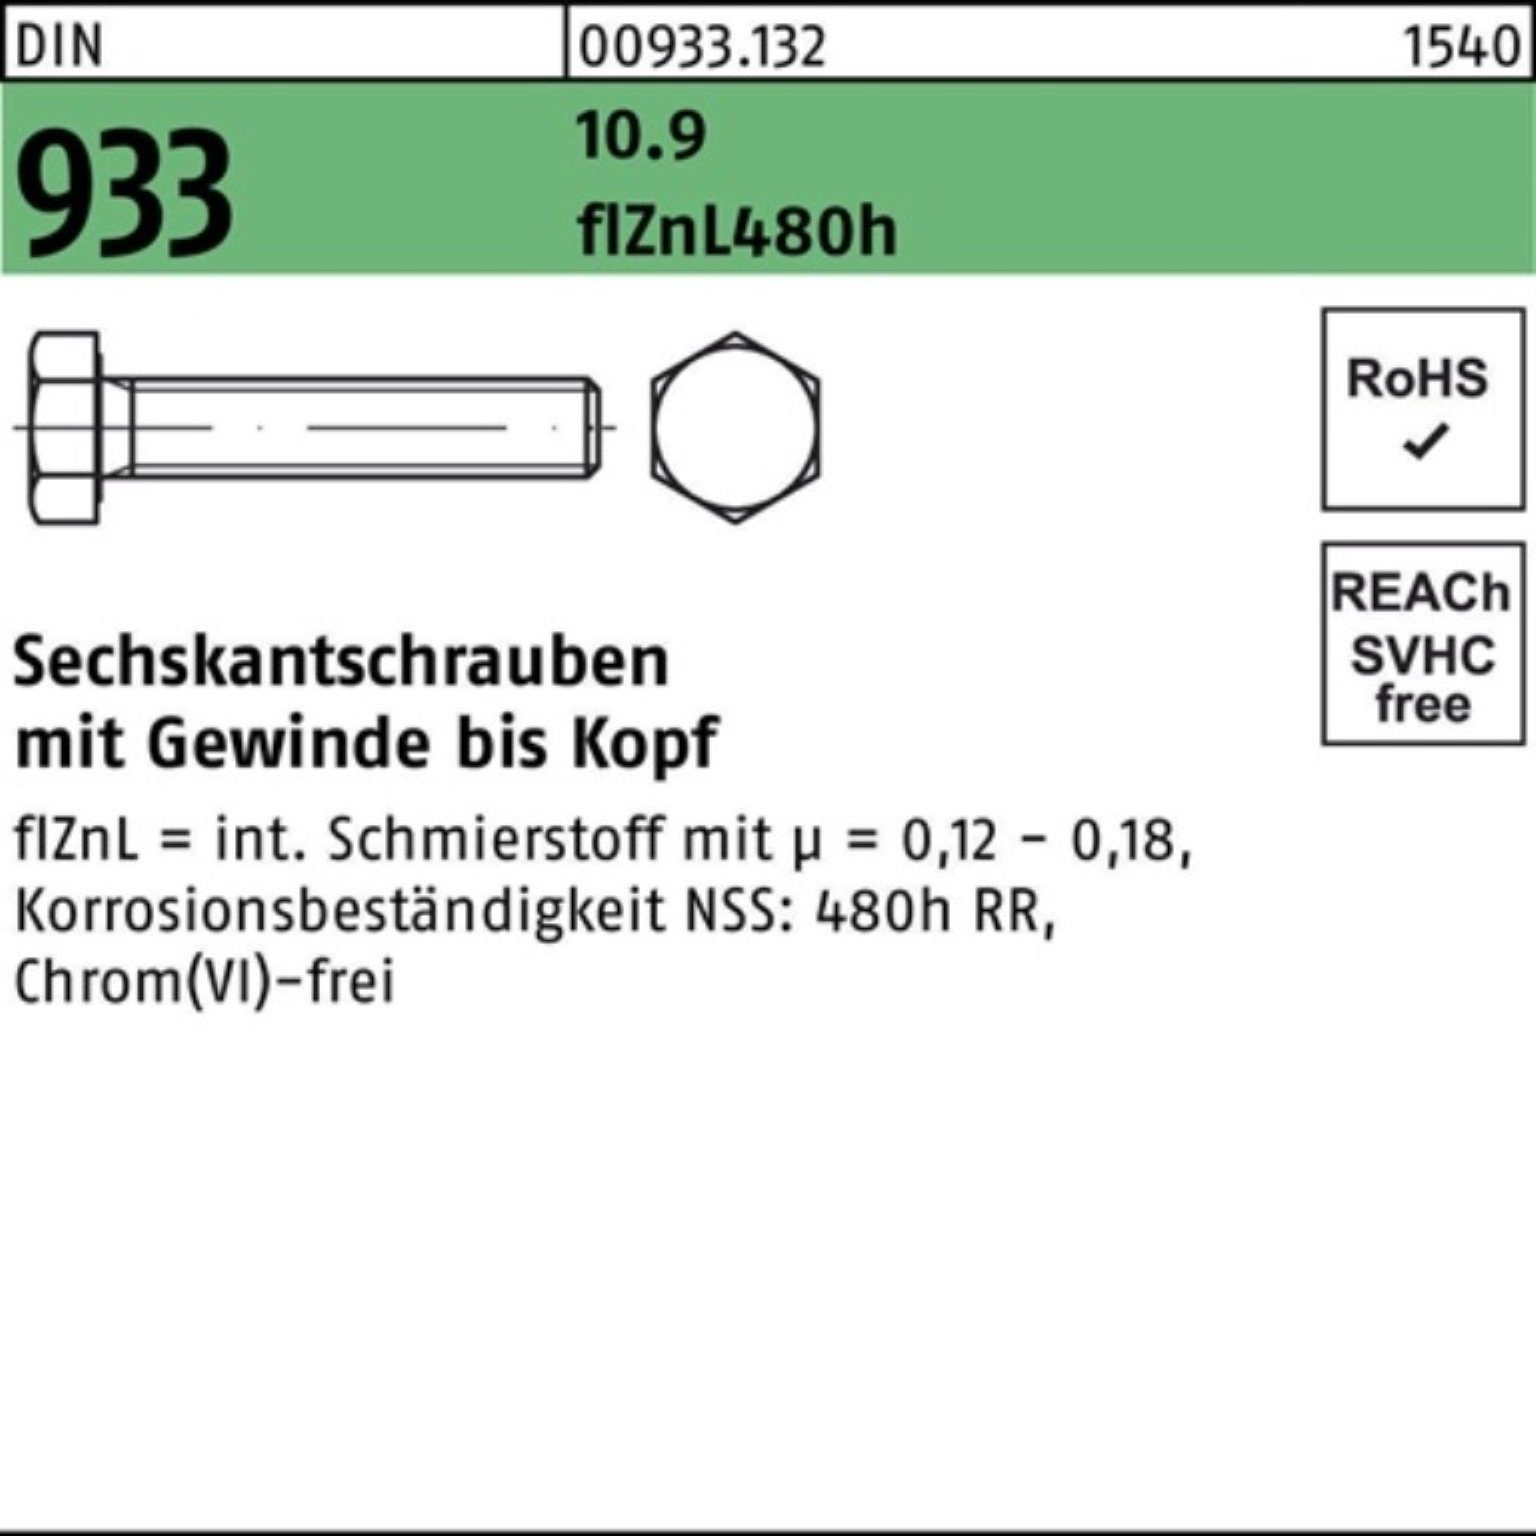 M16x 100er Reyher 10.9 Sechskantschraube 60 Sechskantschraube Pack VG DIN 933 flZnL/nc/x/x/480h